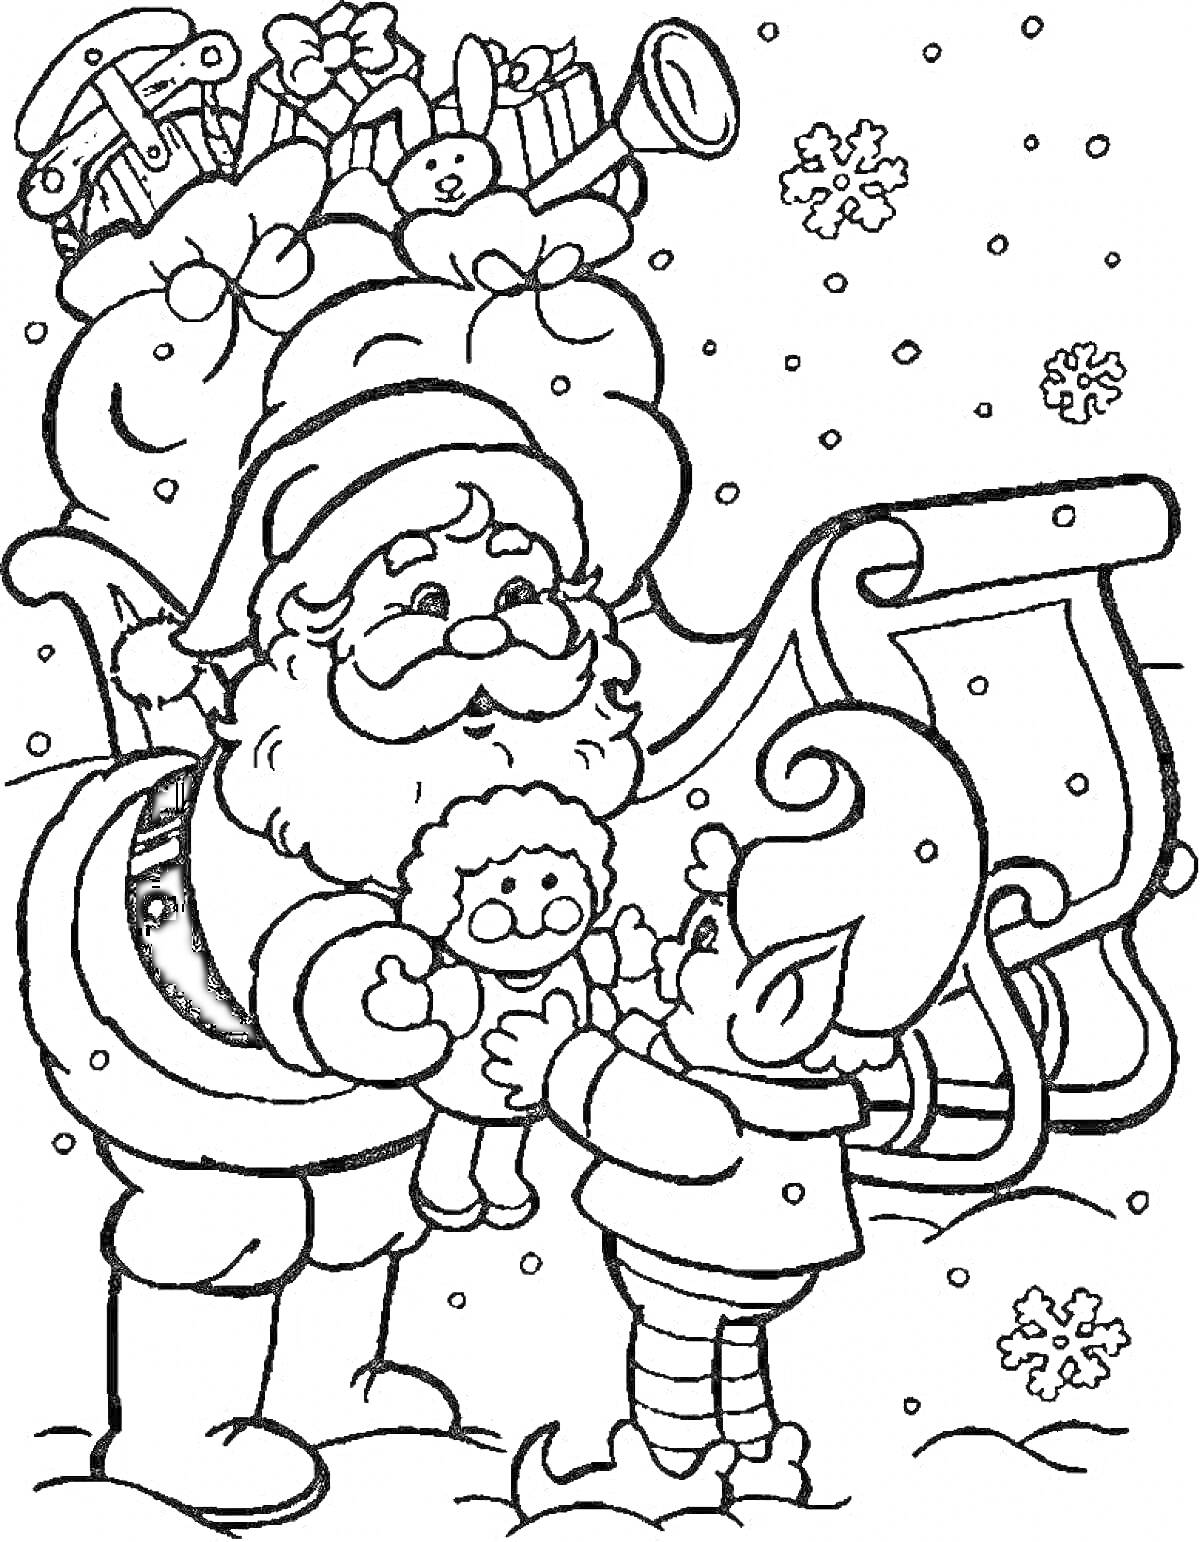 На раскраске изображено: Игрушки, Сани, Кукла, Снежинки, Снег, Рождество, Санта Клаус, Праздники, Эльфы